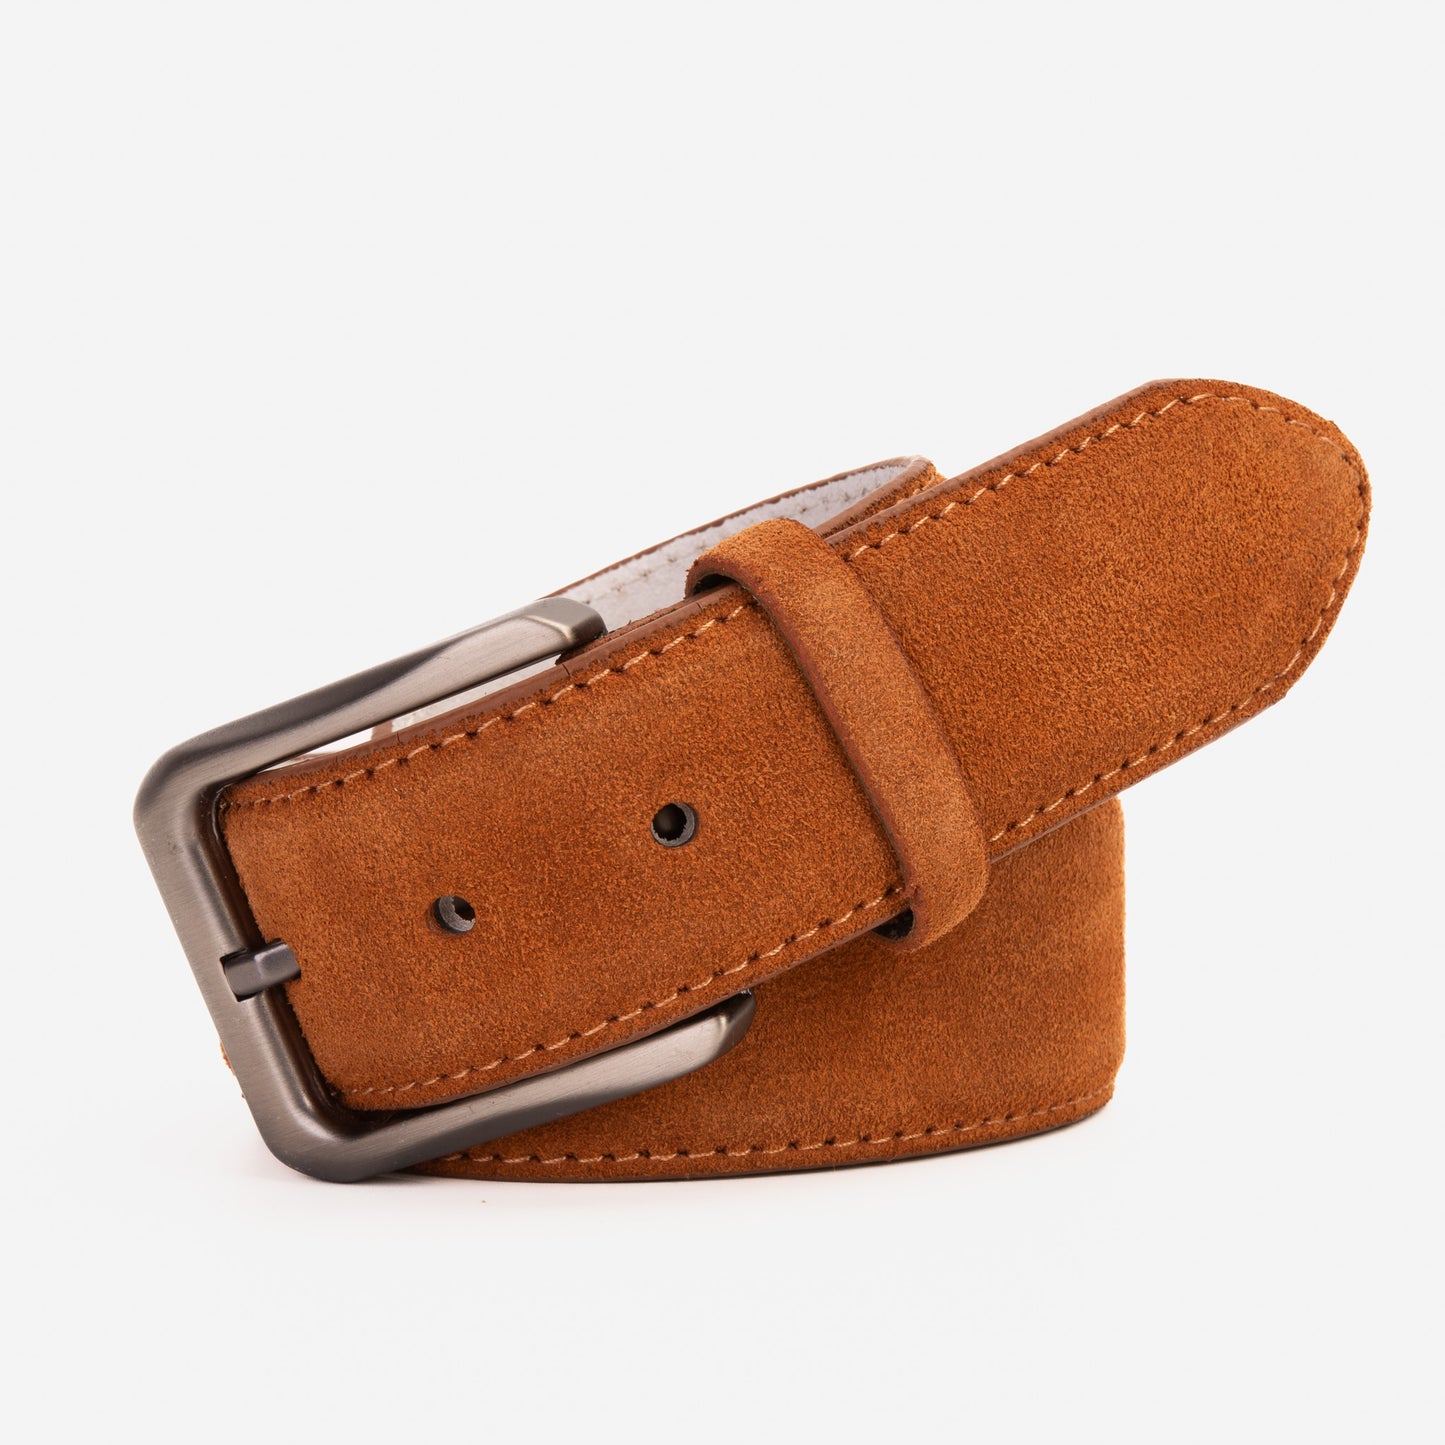 The Lazio Tan Suede Leather Belt